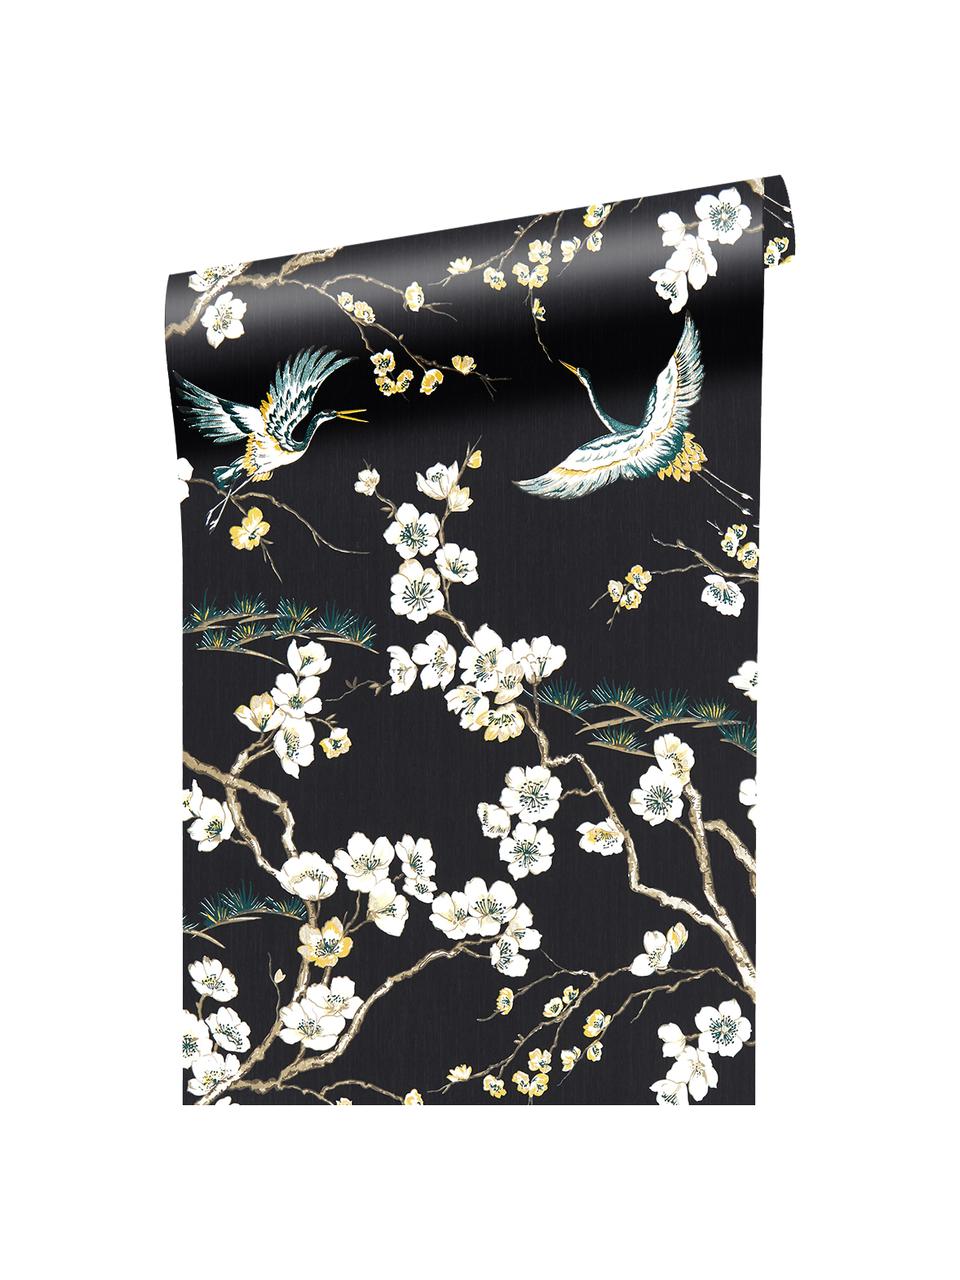 Papel pintado Japanese Flowers, Tejido no tejido, Negro, blanco, azul, amarillo, An 52 x L 1005 cm